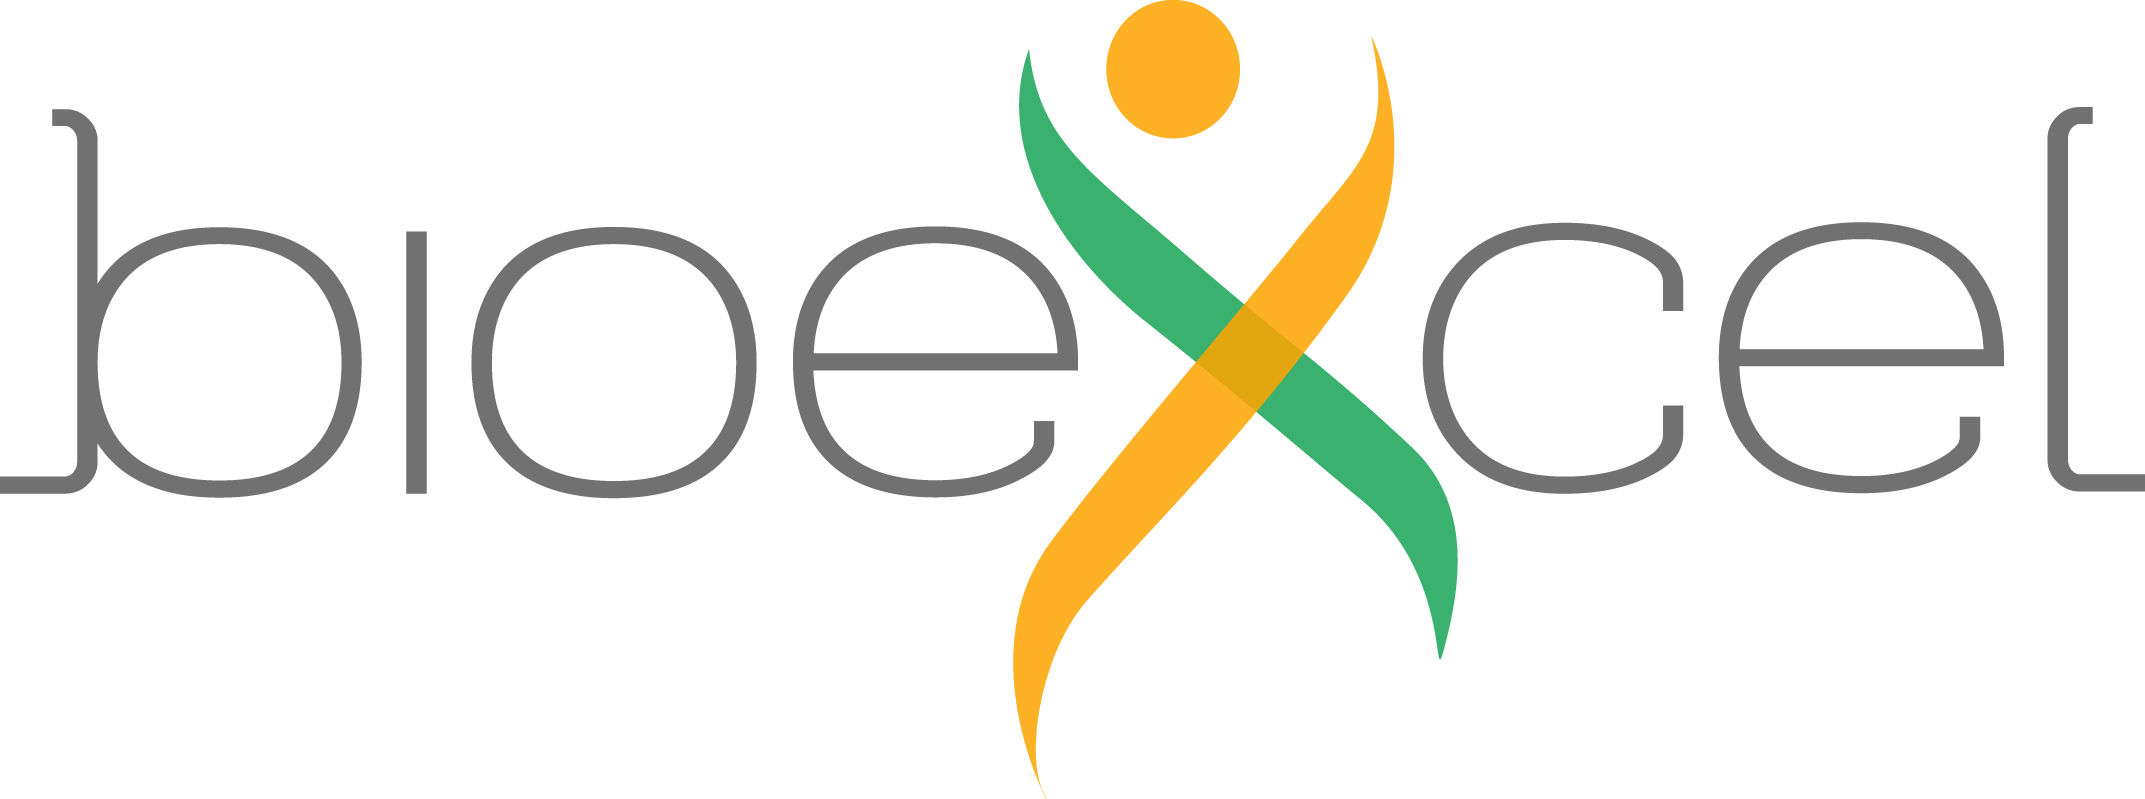 Bioexcel2 logo